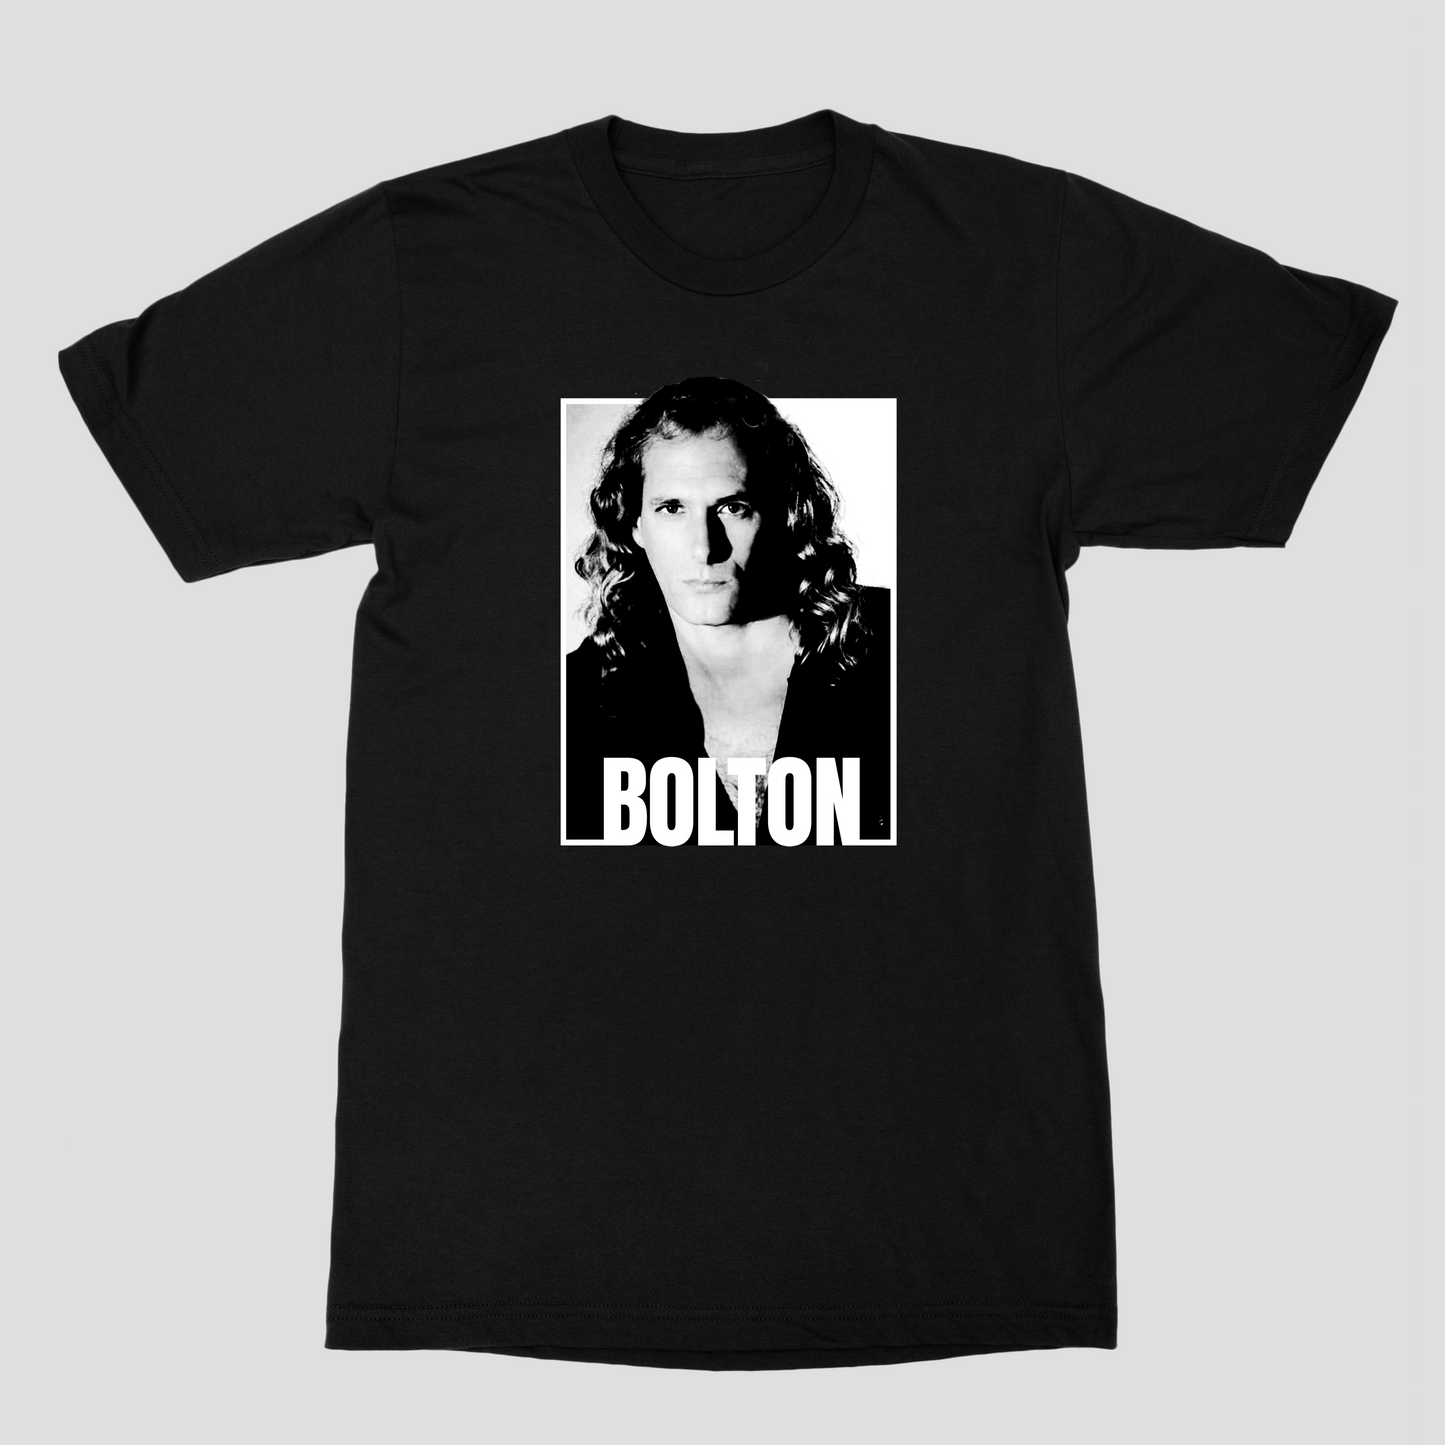 Bolton Vintage Photo T-Shirt *PREORDER*